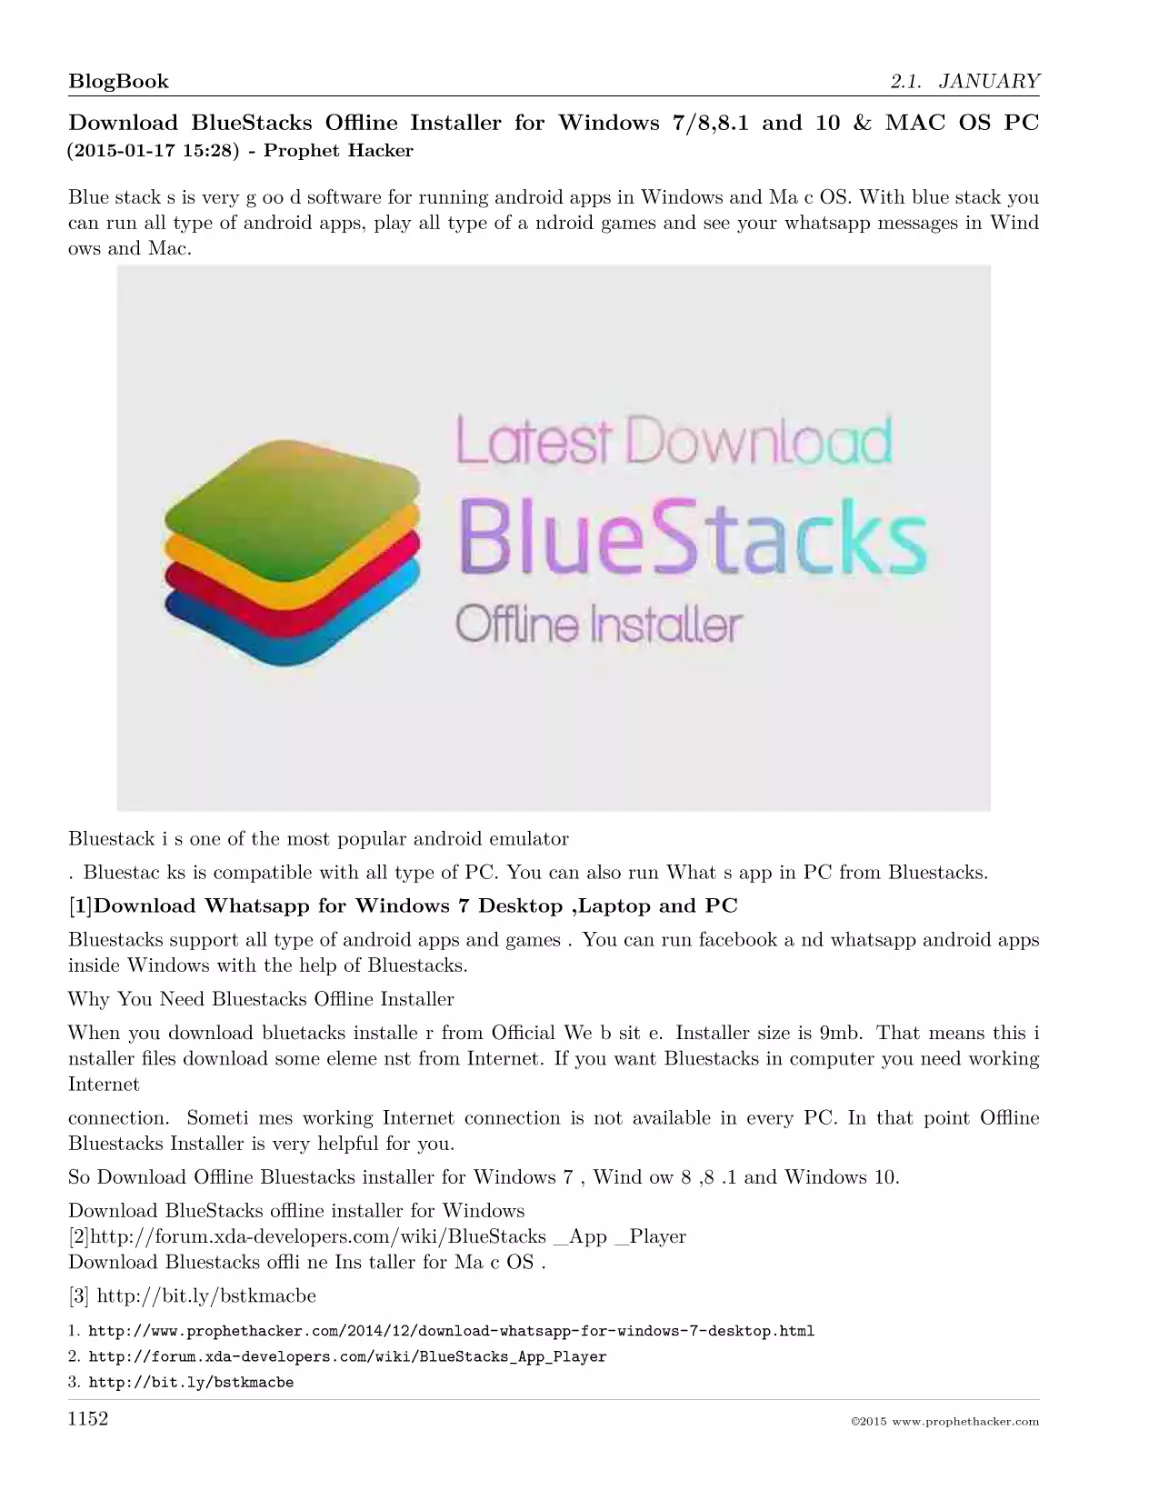 Download BlueStacks Offline Installer for Windows 7/8,8.1 and 10 & MAC OS PC (2015-01-17 15